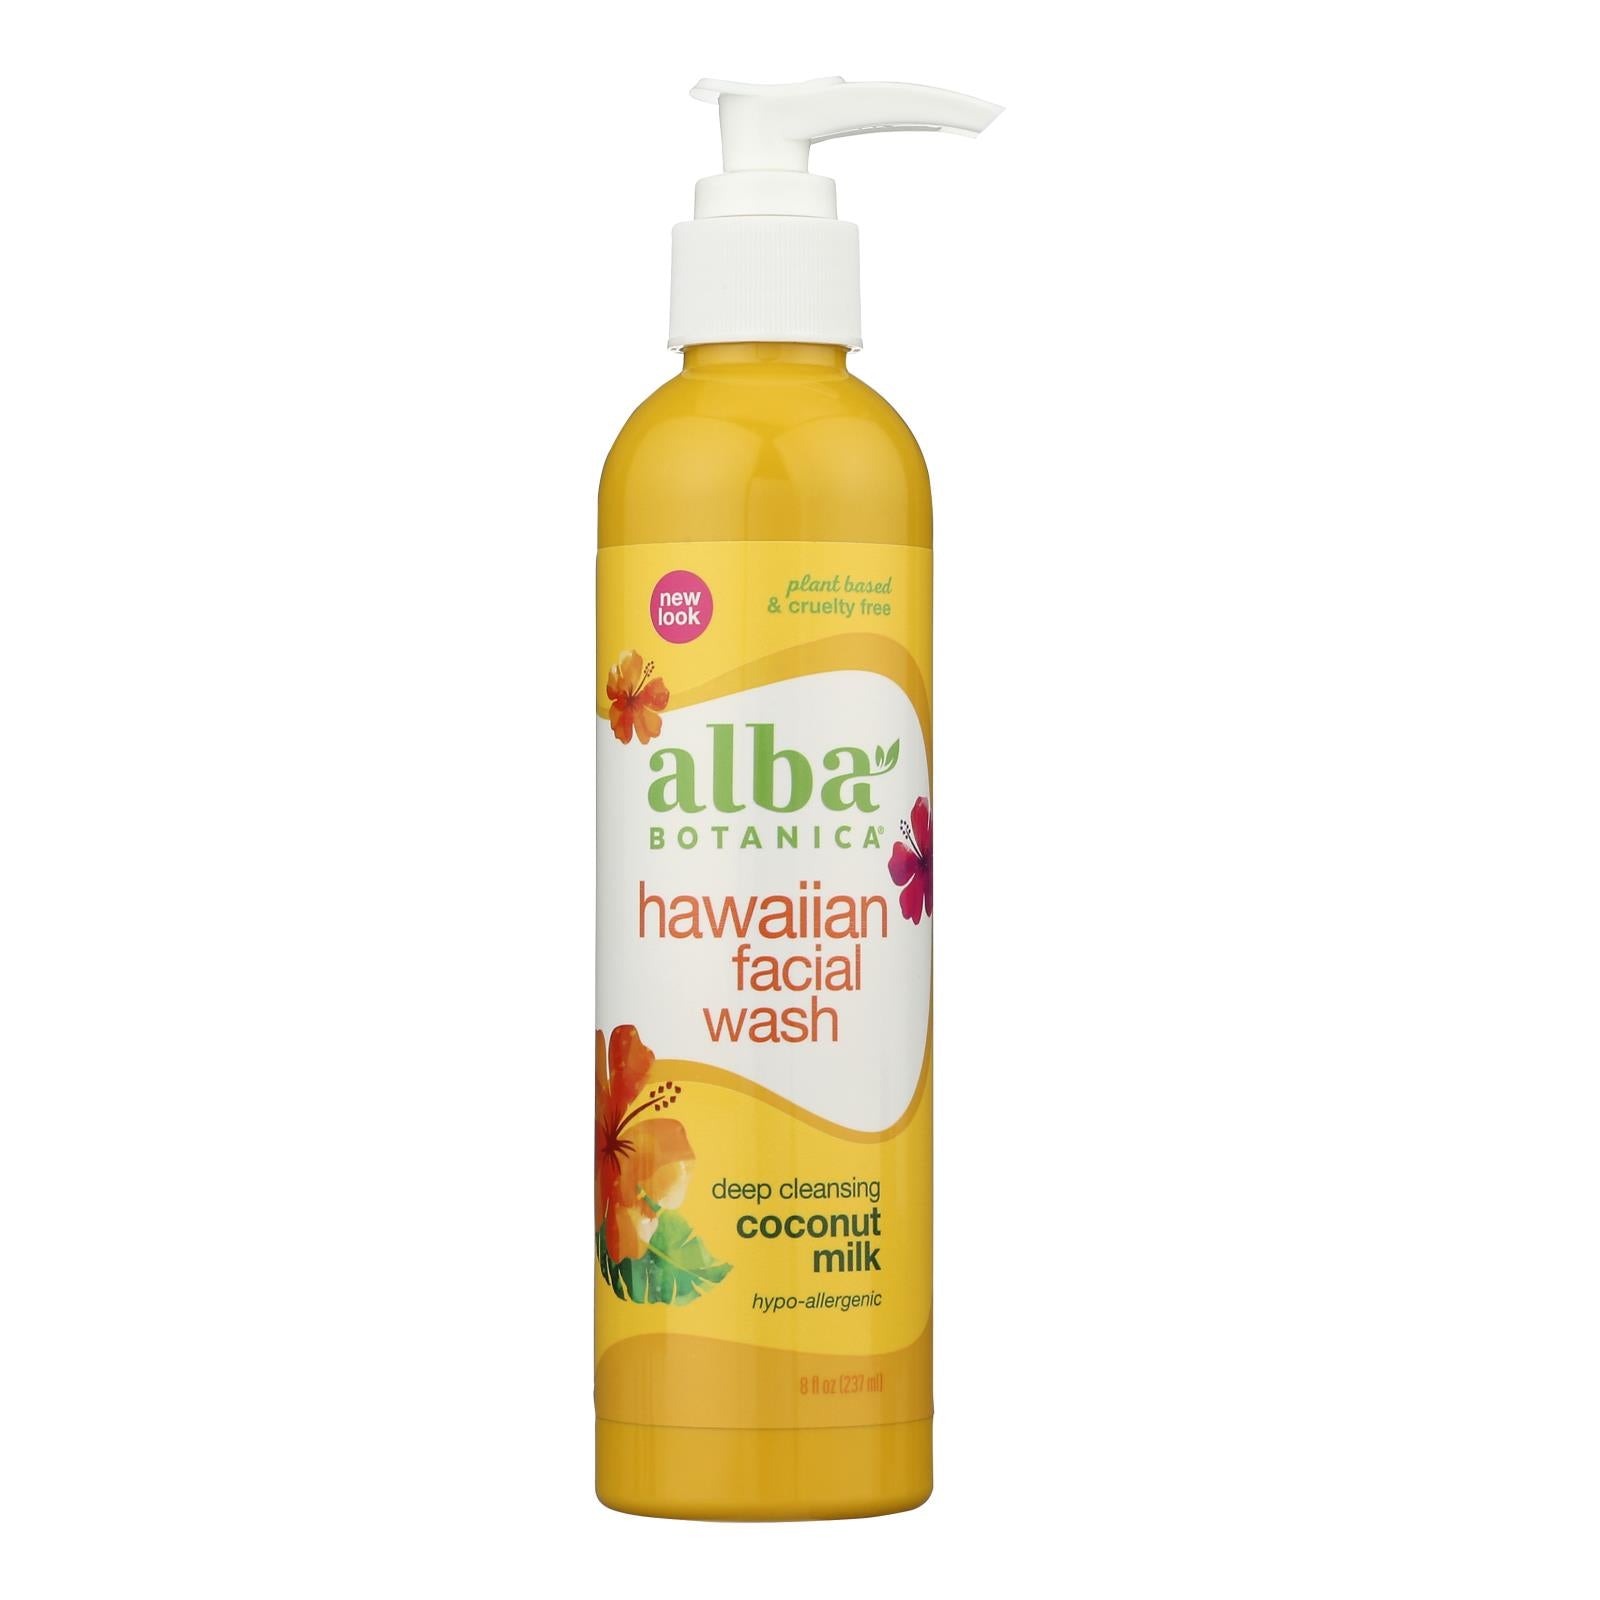 Alba Botanica - Hawaiian Facial Wash Coconut Milk - 8 Fl Oz